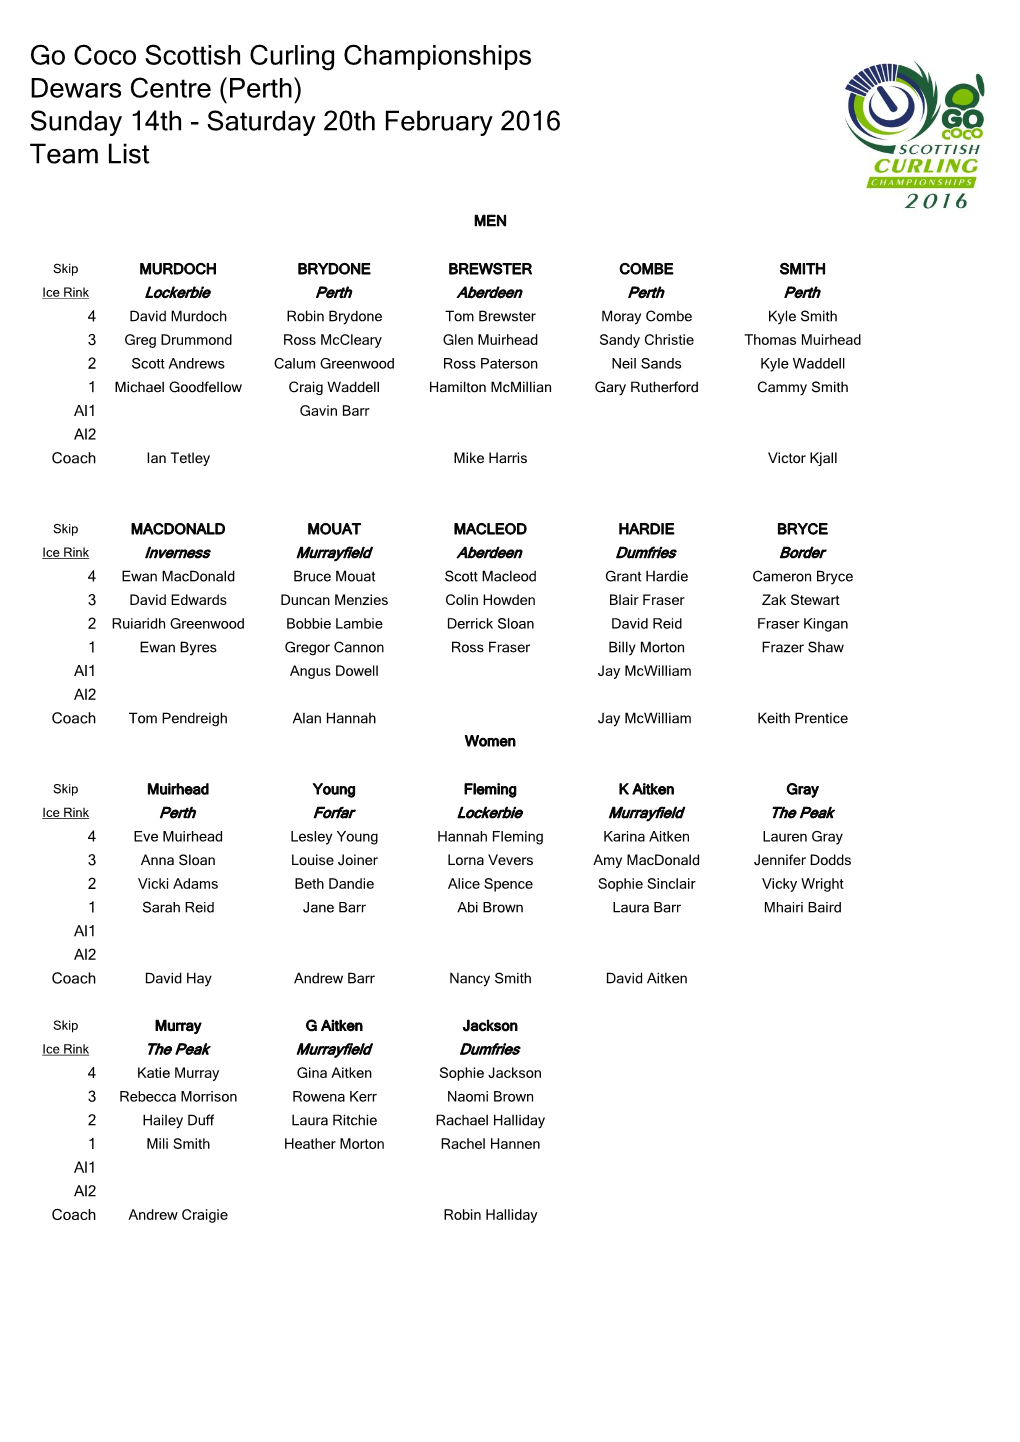 Go Coco Scottish Curling Championships Dewars Centre (Perth) Sunday 14Th - Saturday 20Th February 2016 Team List